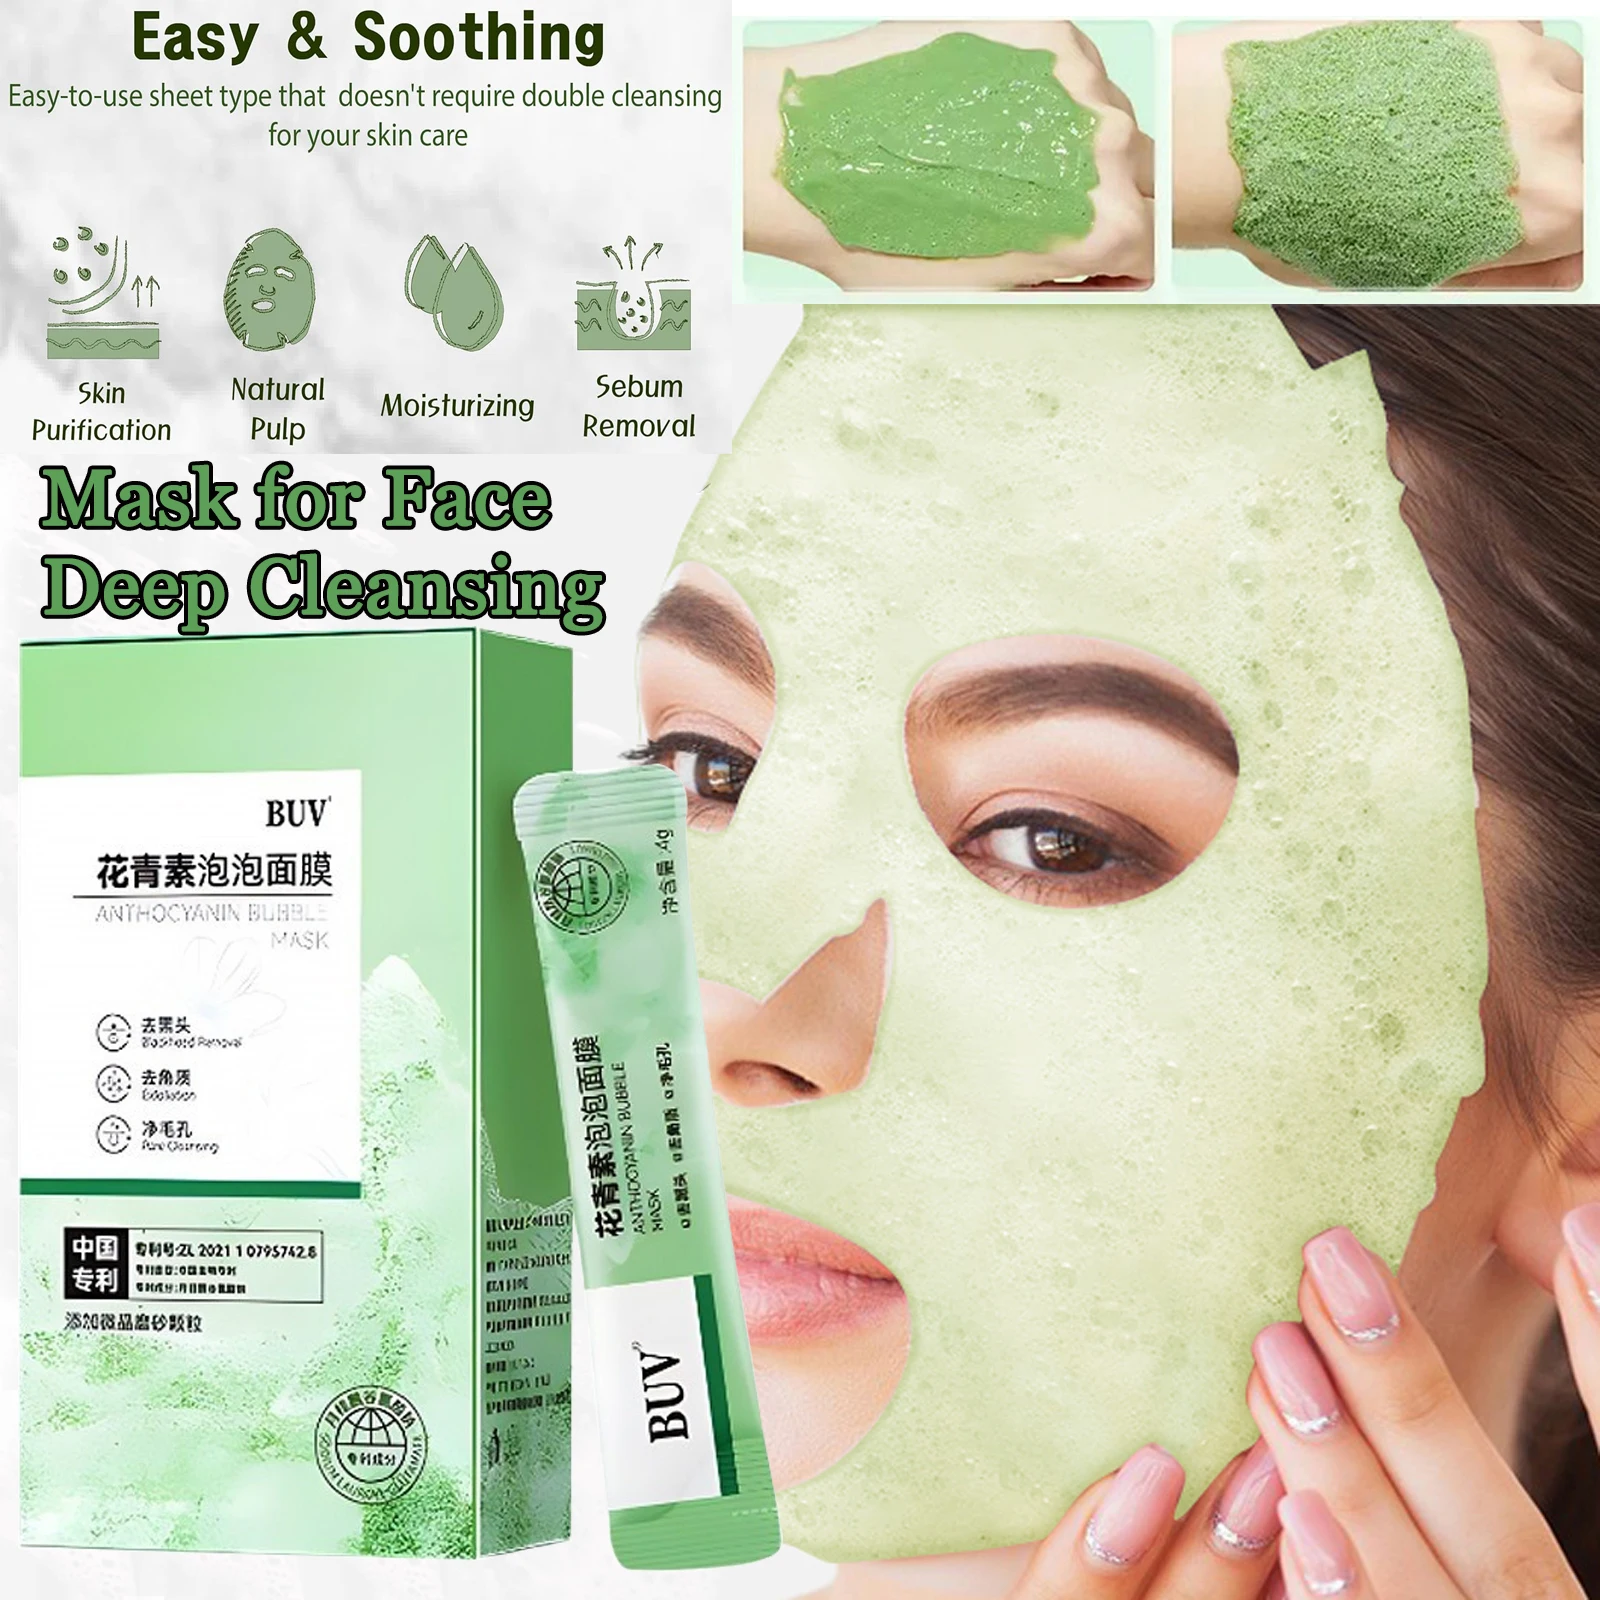 

BUV Anthocyanin Bubble Mask for Face Deep Cleansing Shrinking Pore Improving Dullness Controlling Oil Moisturizing Mask Skincare